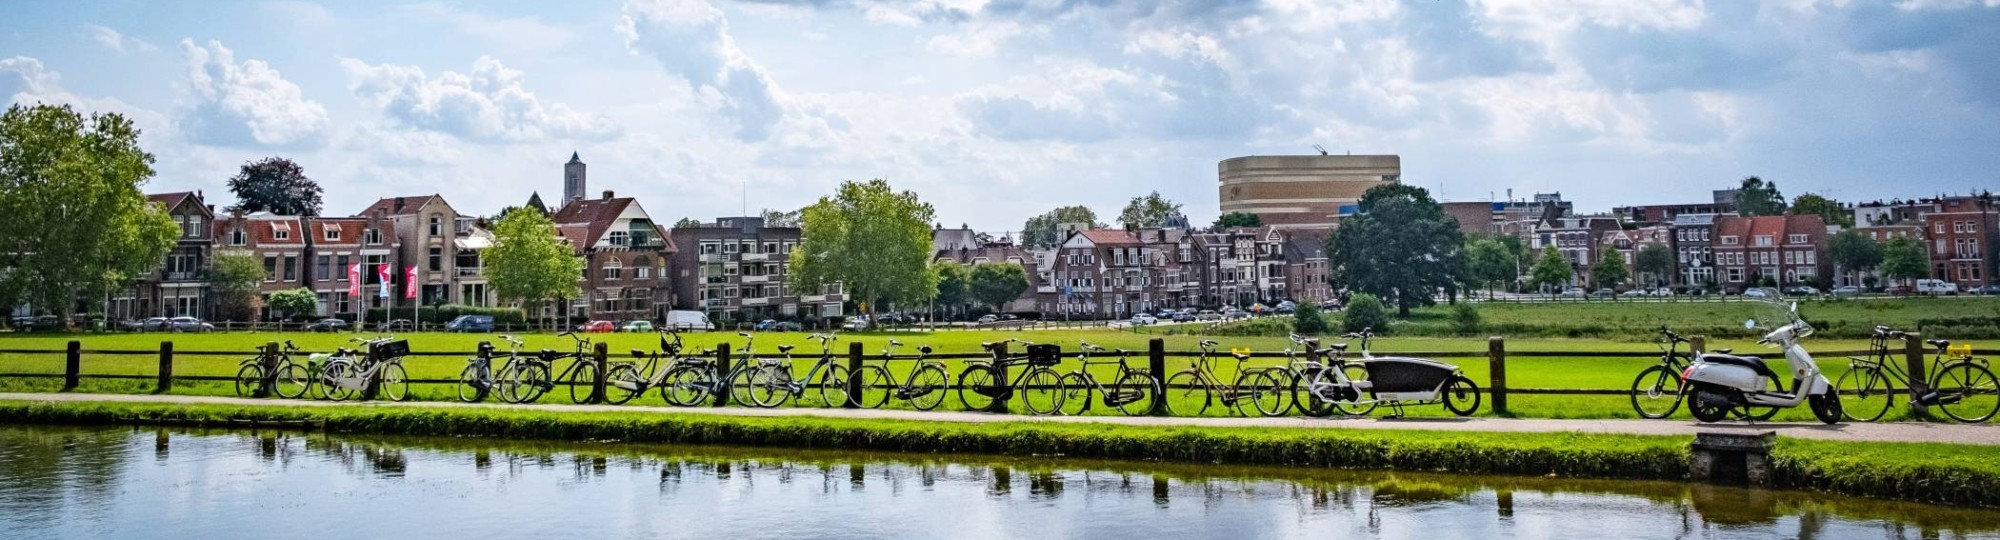 Arnhem fietsen